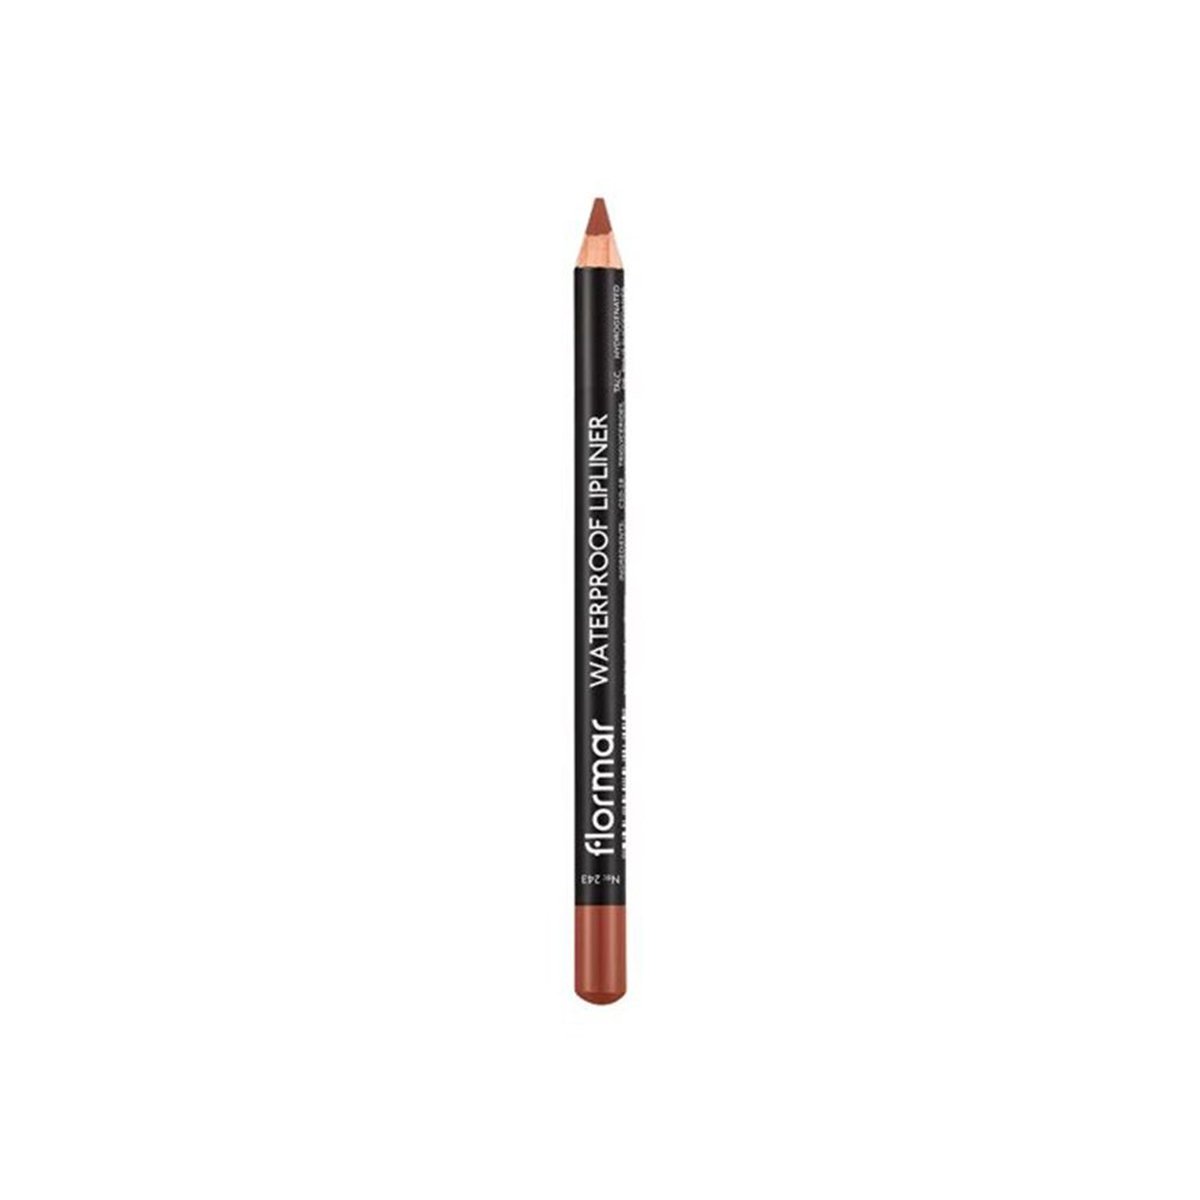 Flormar Waterproof Lipliner Pencil - 243 Hot Cocoa 1pc